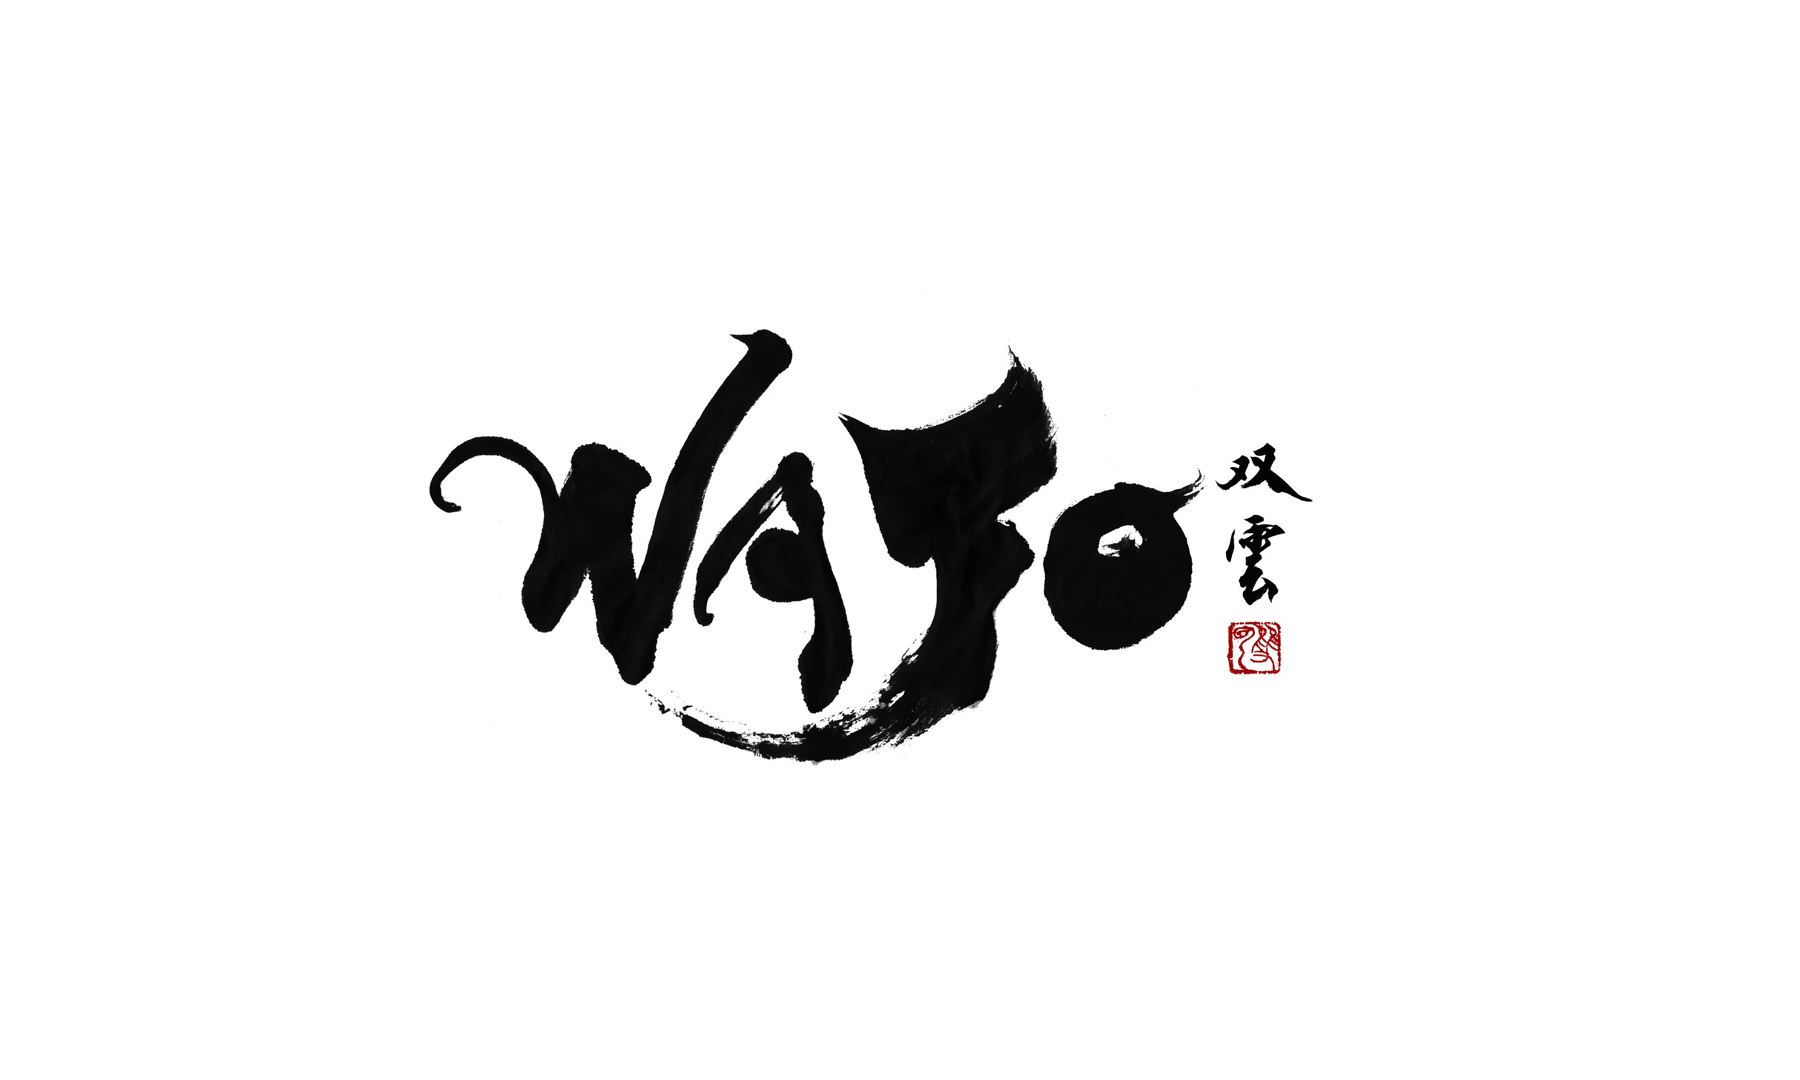 wajo's image